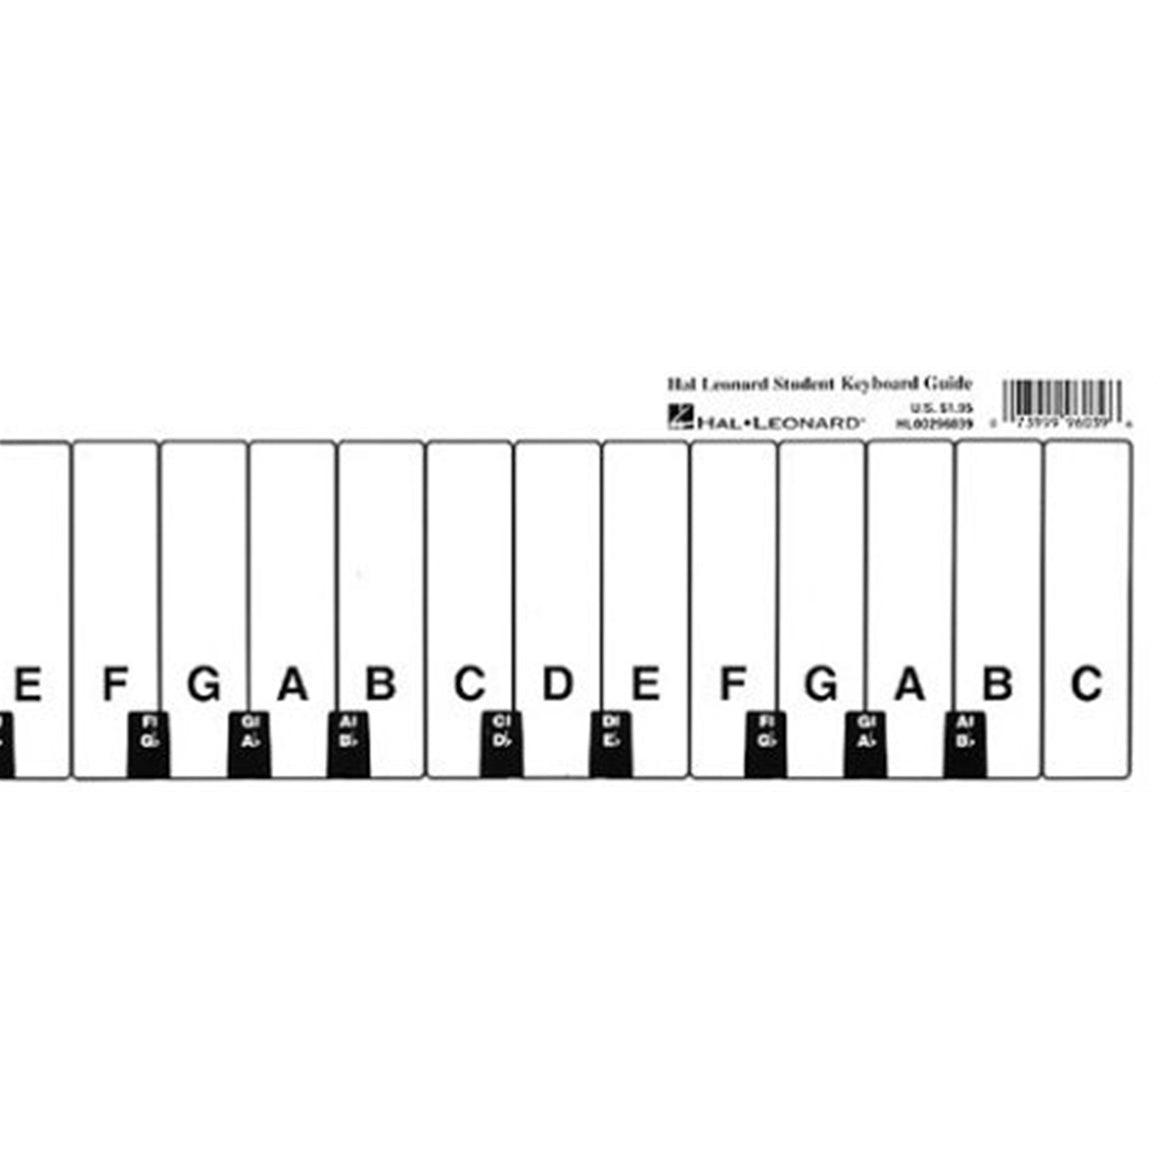 HAL LEONARD 296039 Hal Leonard Student Keyboard Guide